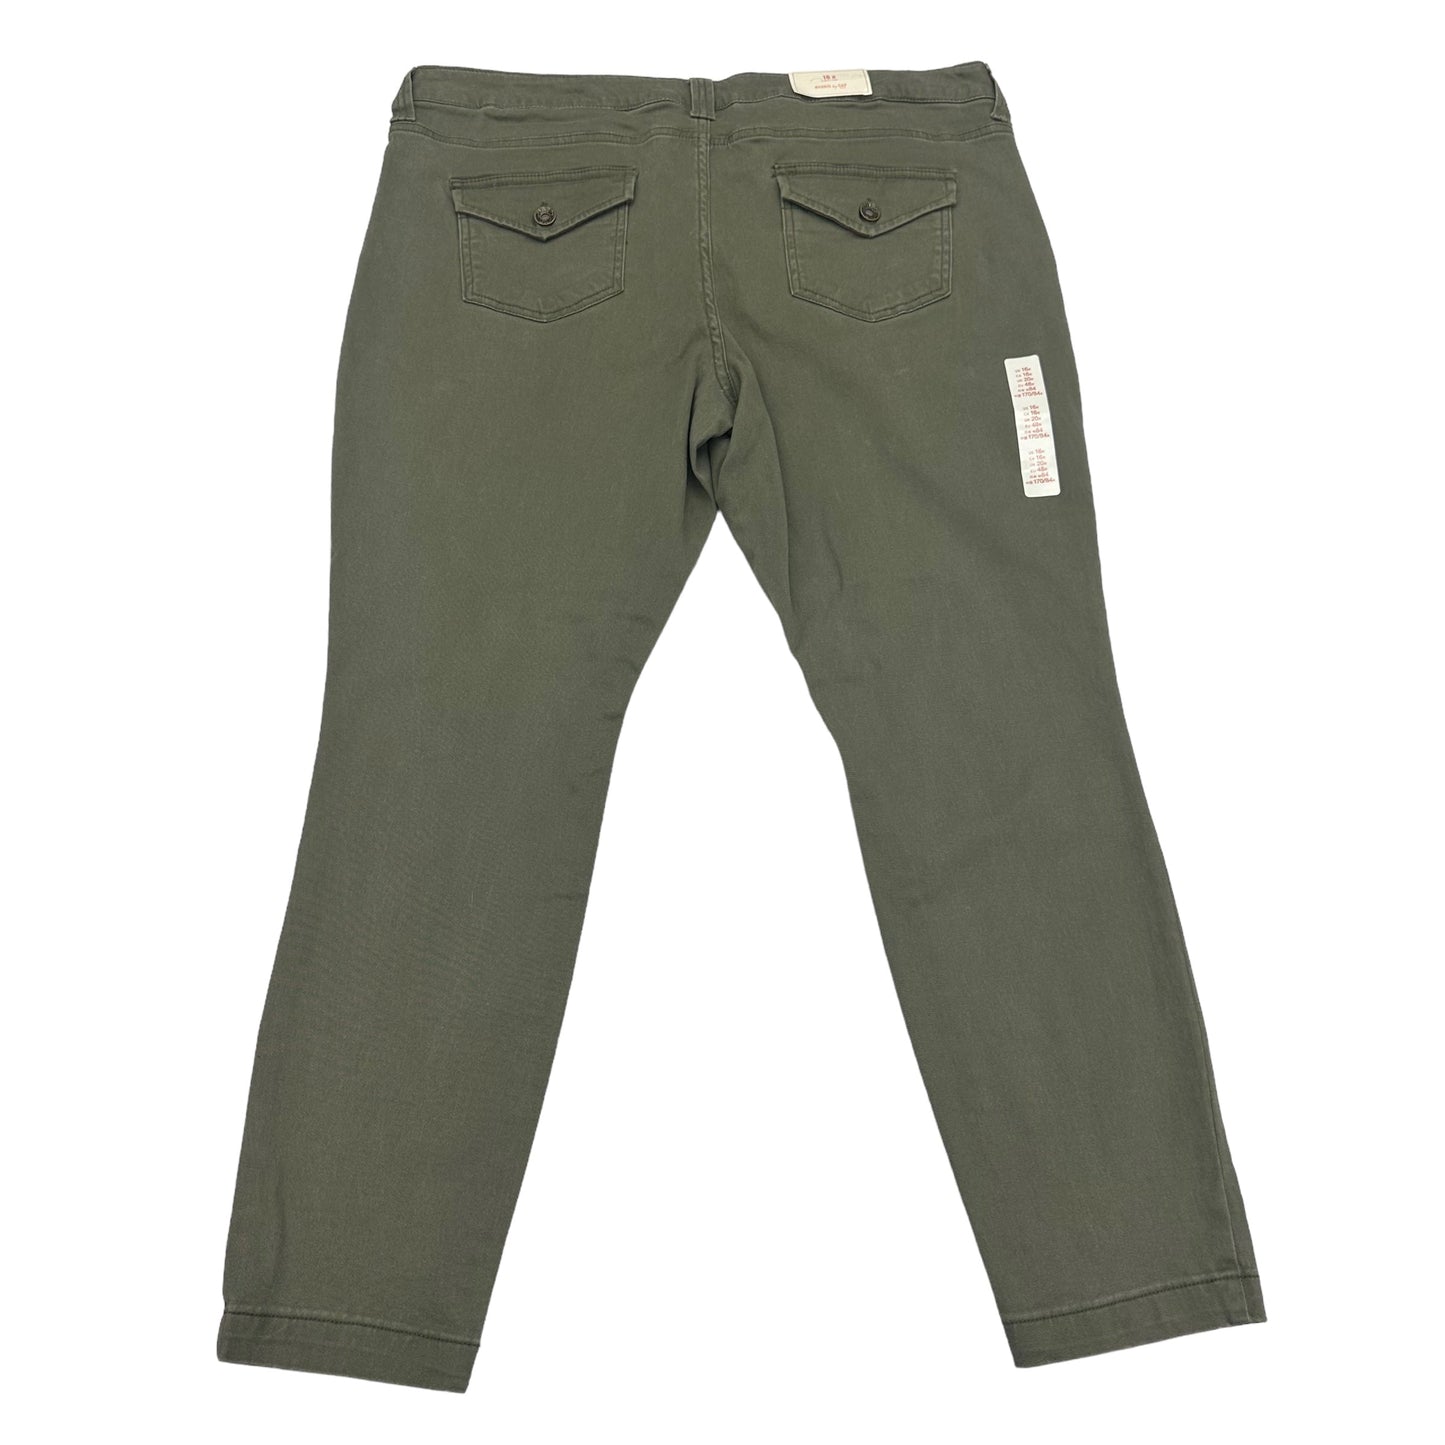 Pants Chinos & Khakis By Gap  Size: 16